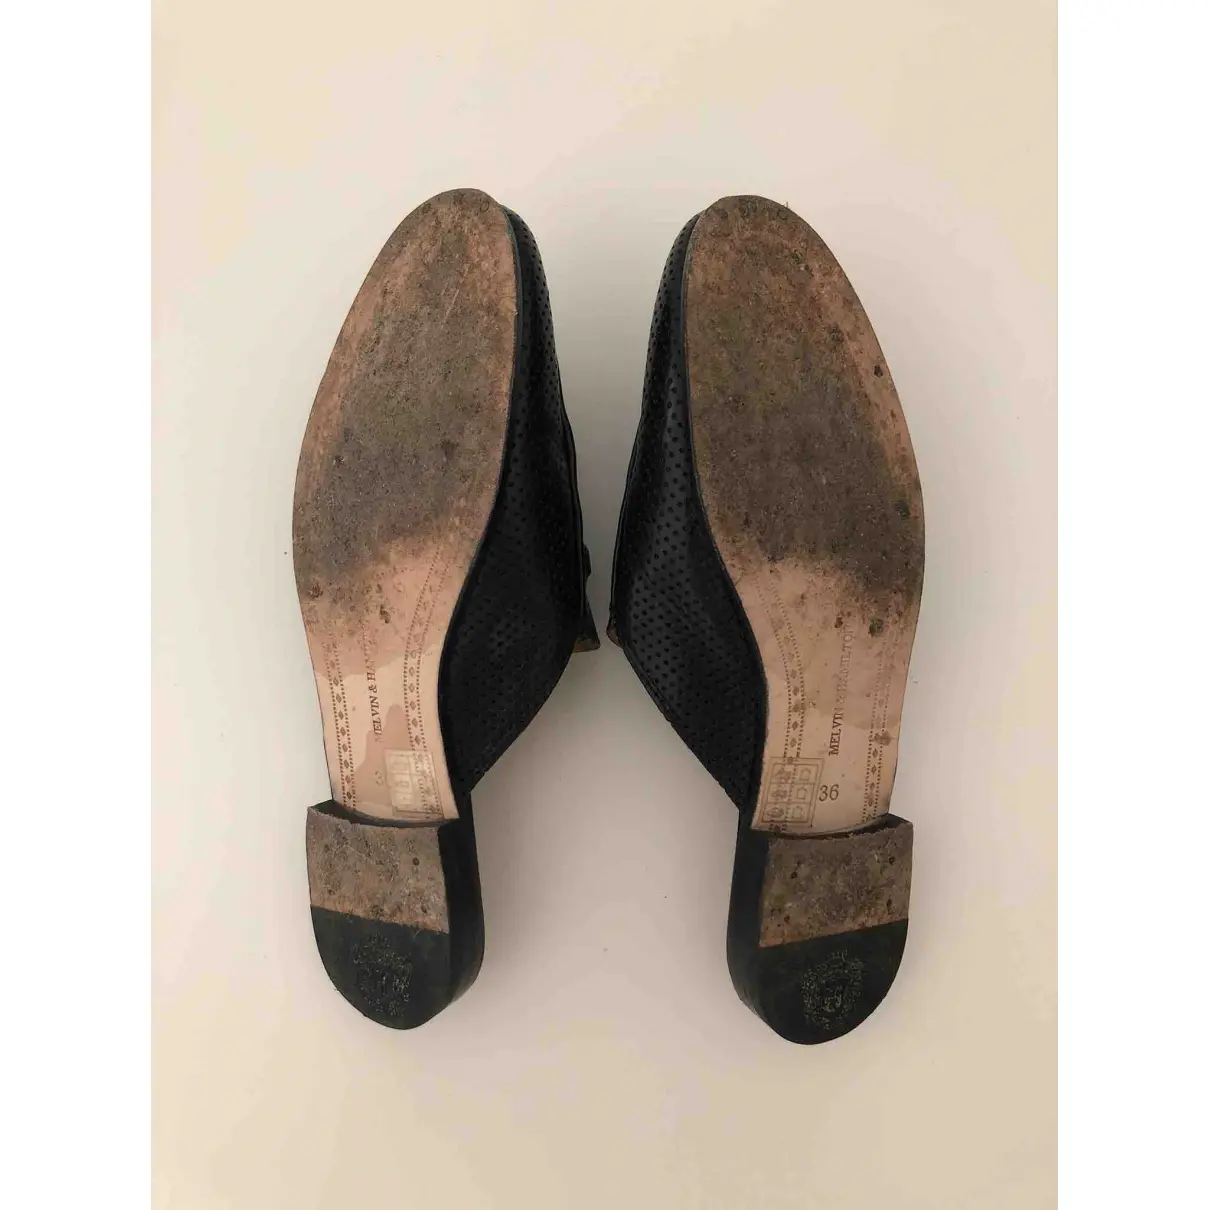 Buy Melvin&Hamilton Leather sandals online